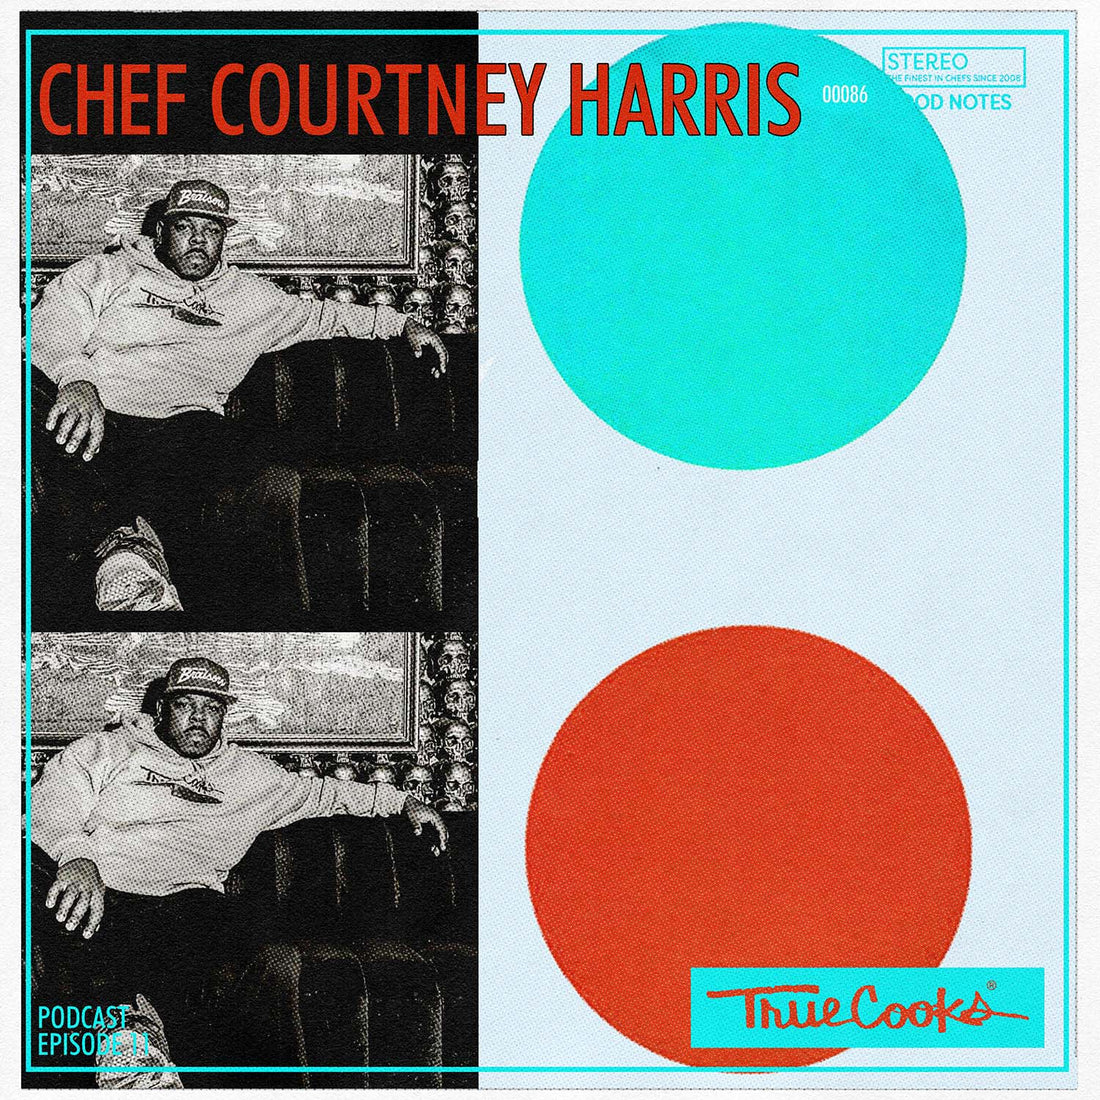 Truecooks Podcast Episode 11 : Chef Courtney Harris